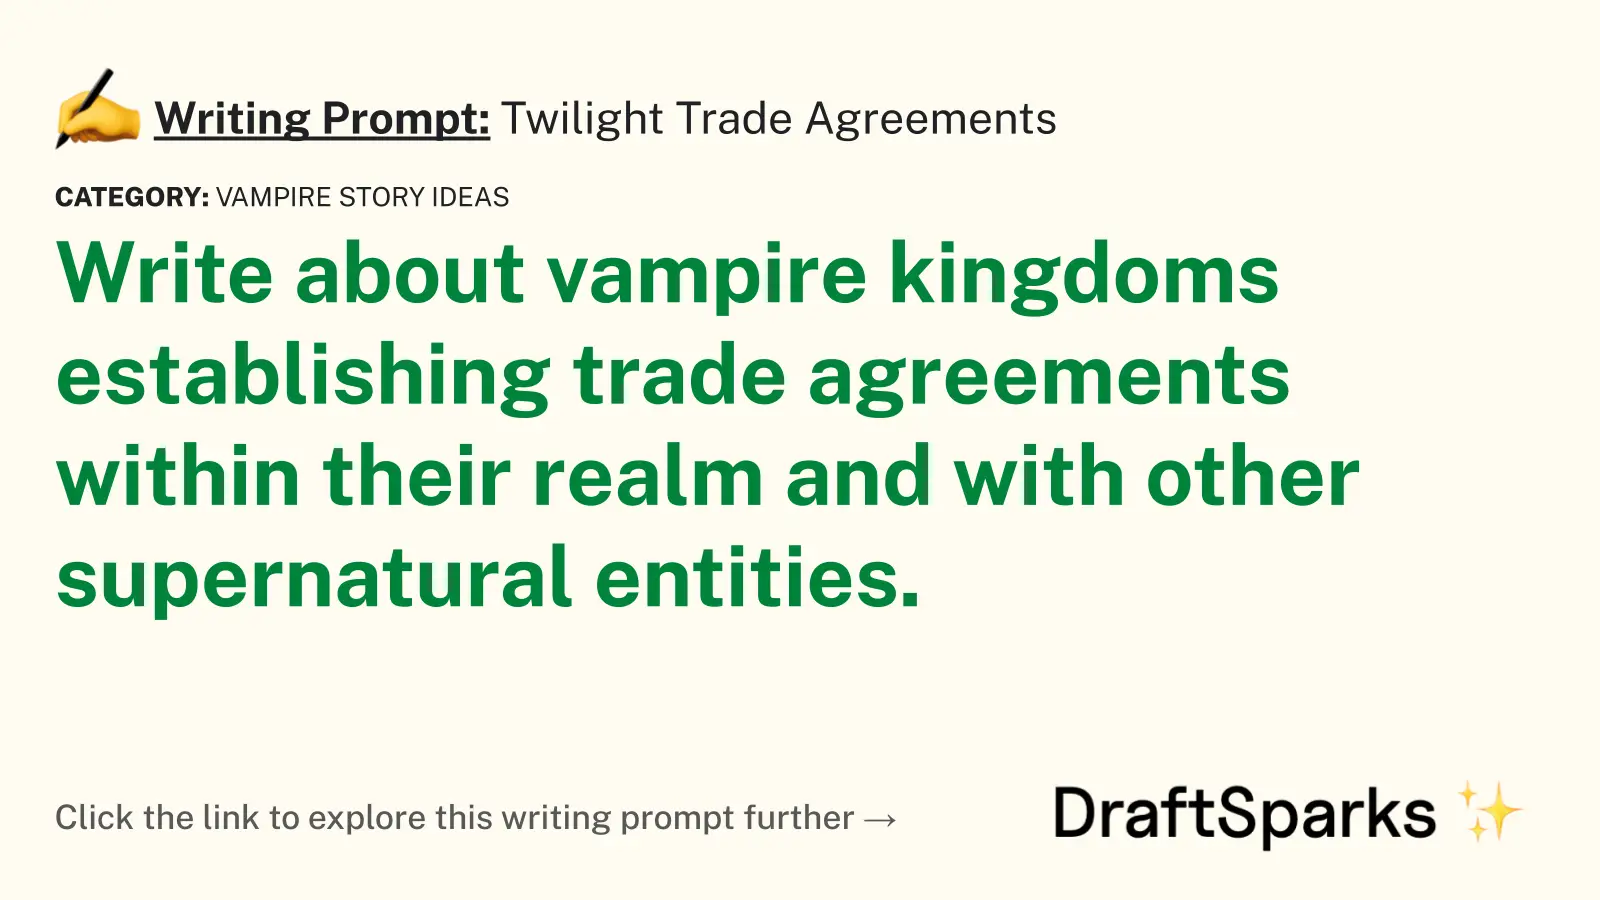 Twilight Trade Agreements